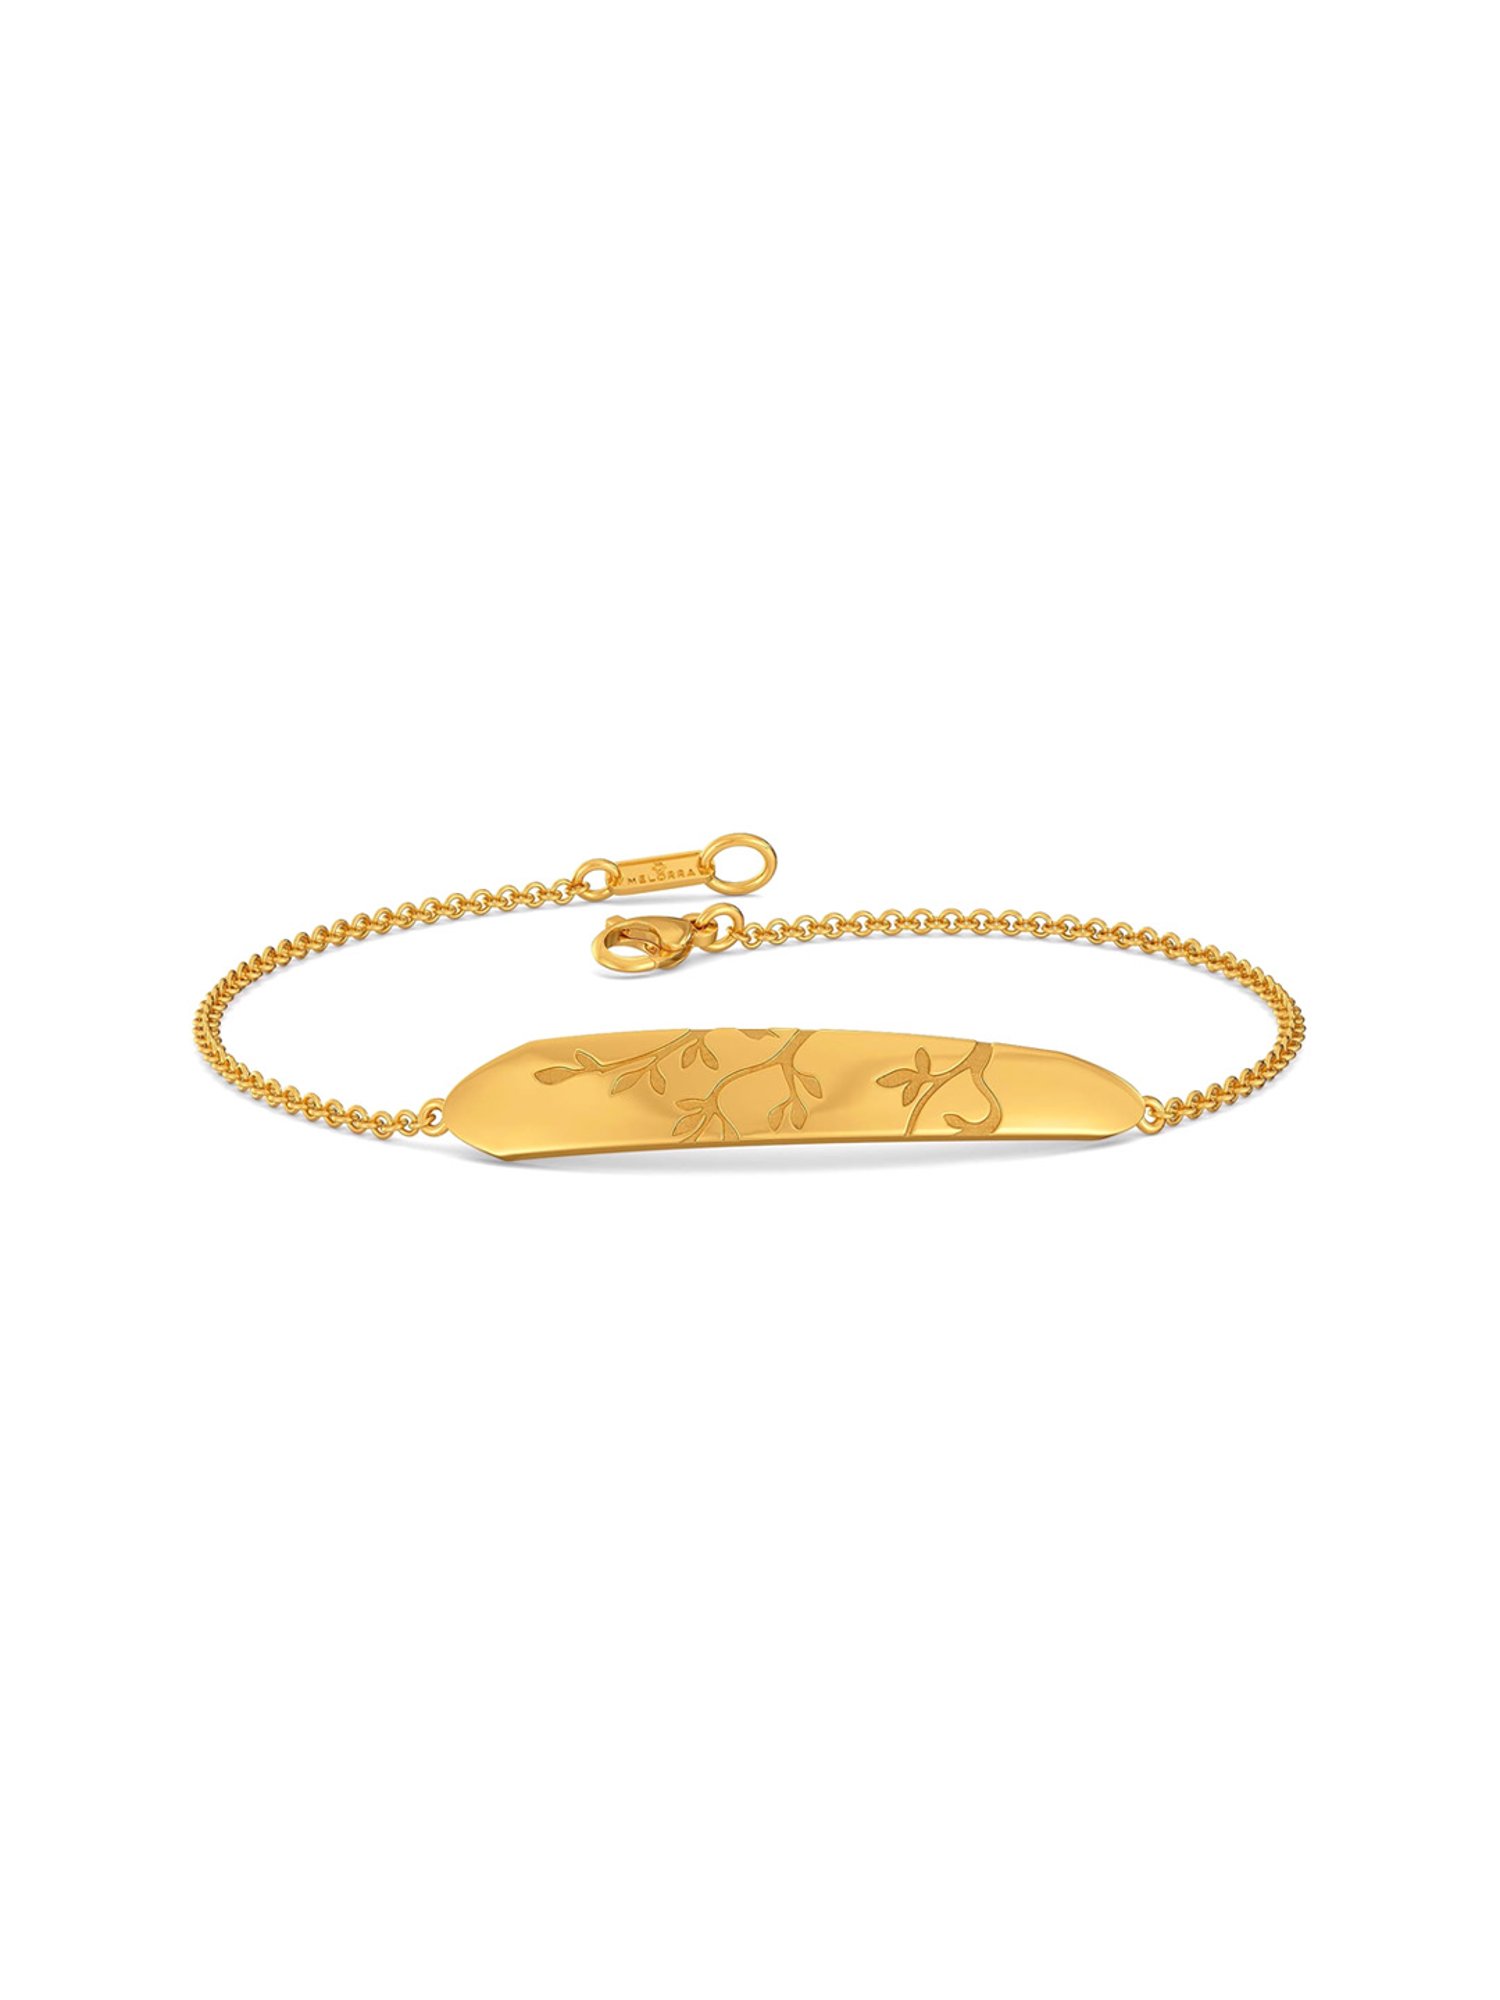 Source Fathers Day Gift Engraved Name Bracelet Gold Bar Bracelet with Link  Chain 925Silver Men Bracelet on malibabacom